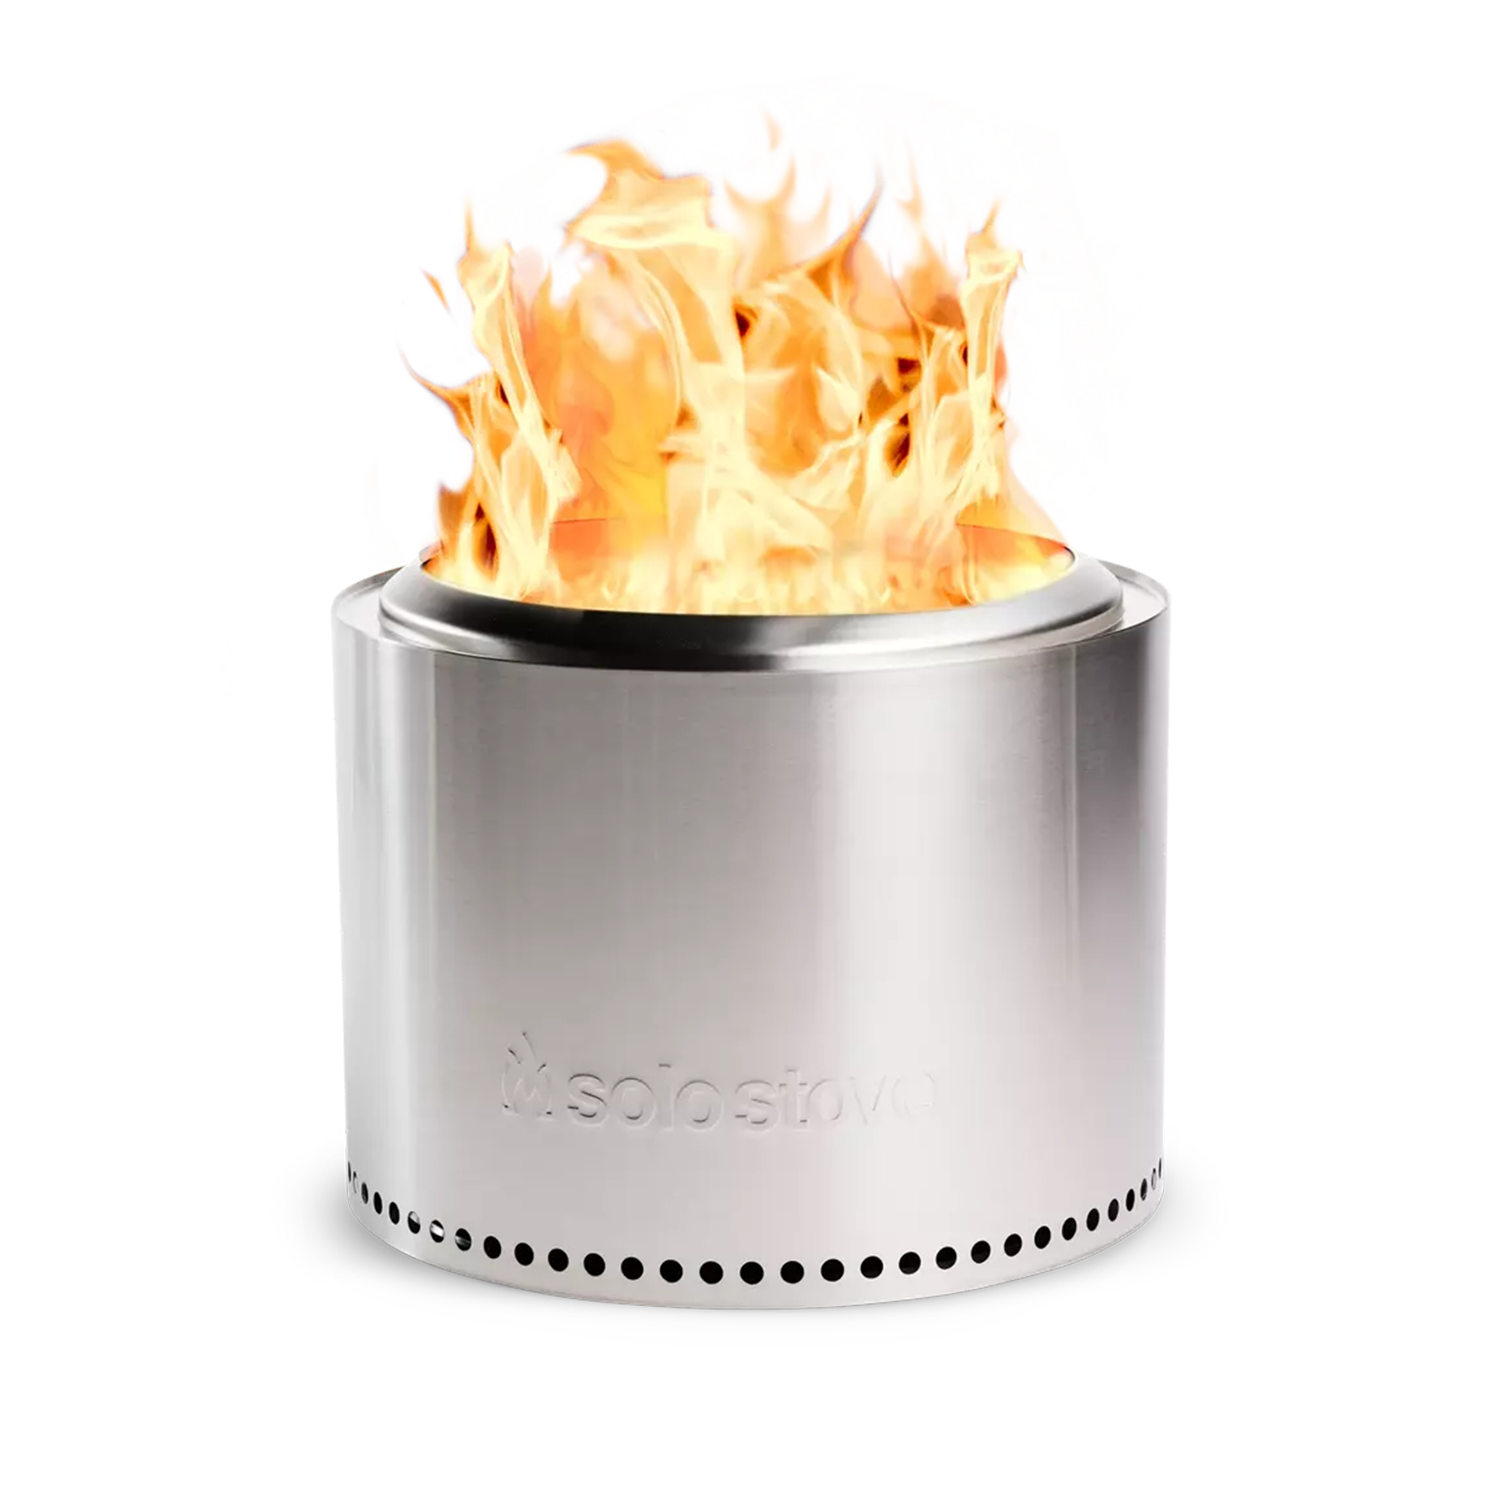 bonfire solo stove 2.0